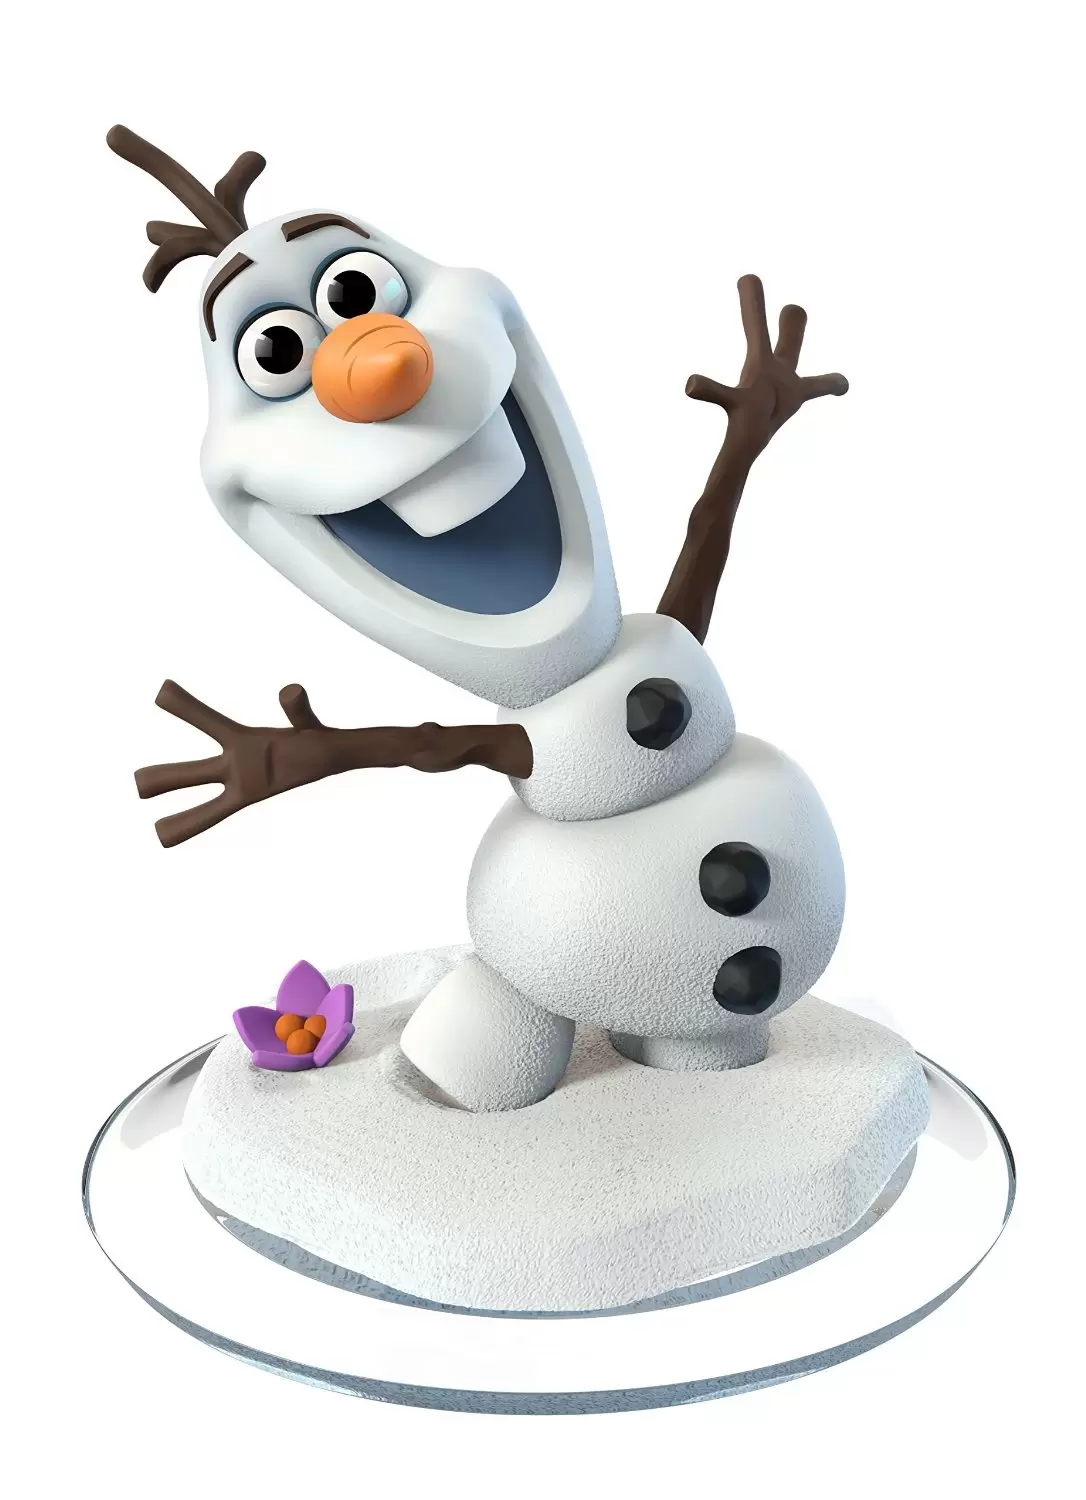 Disney Infinity Action figures - Olaf